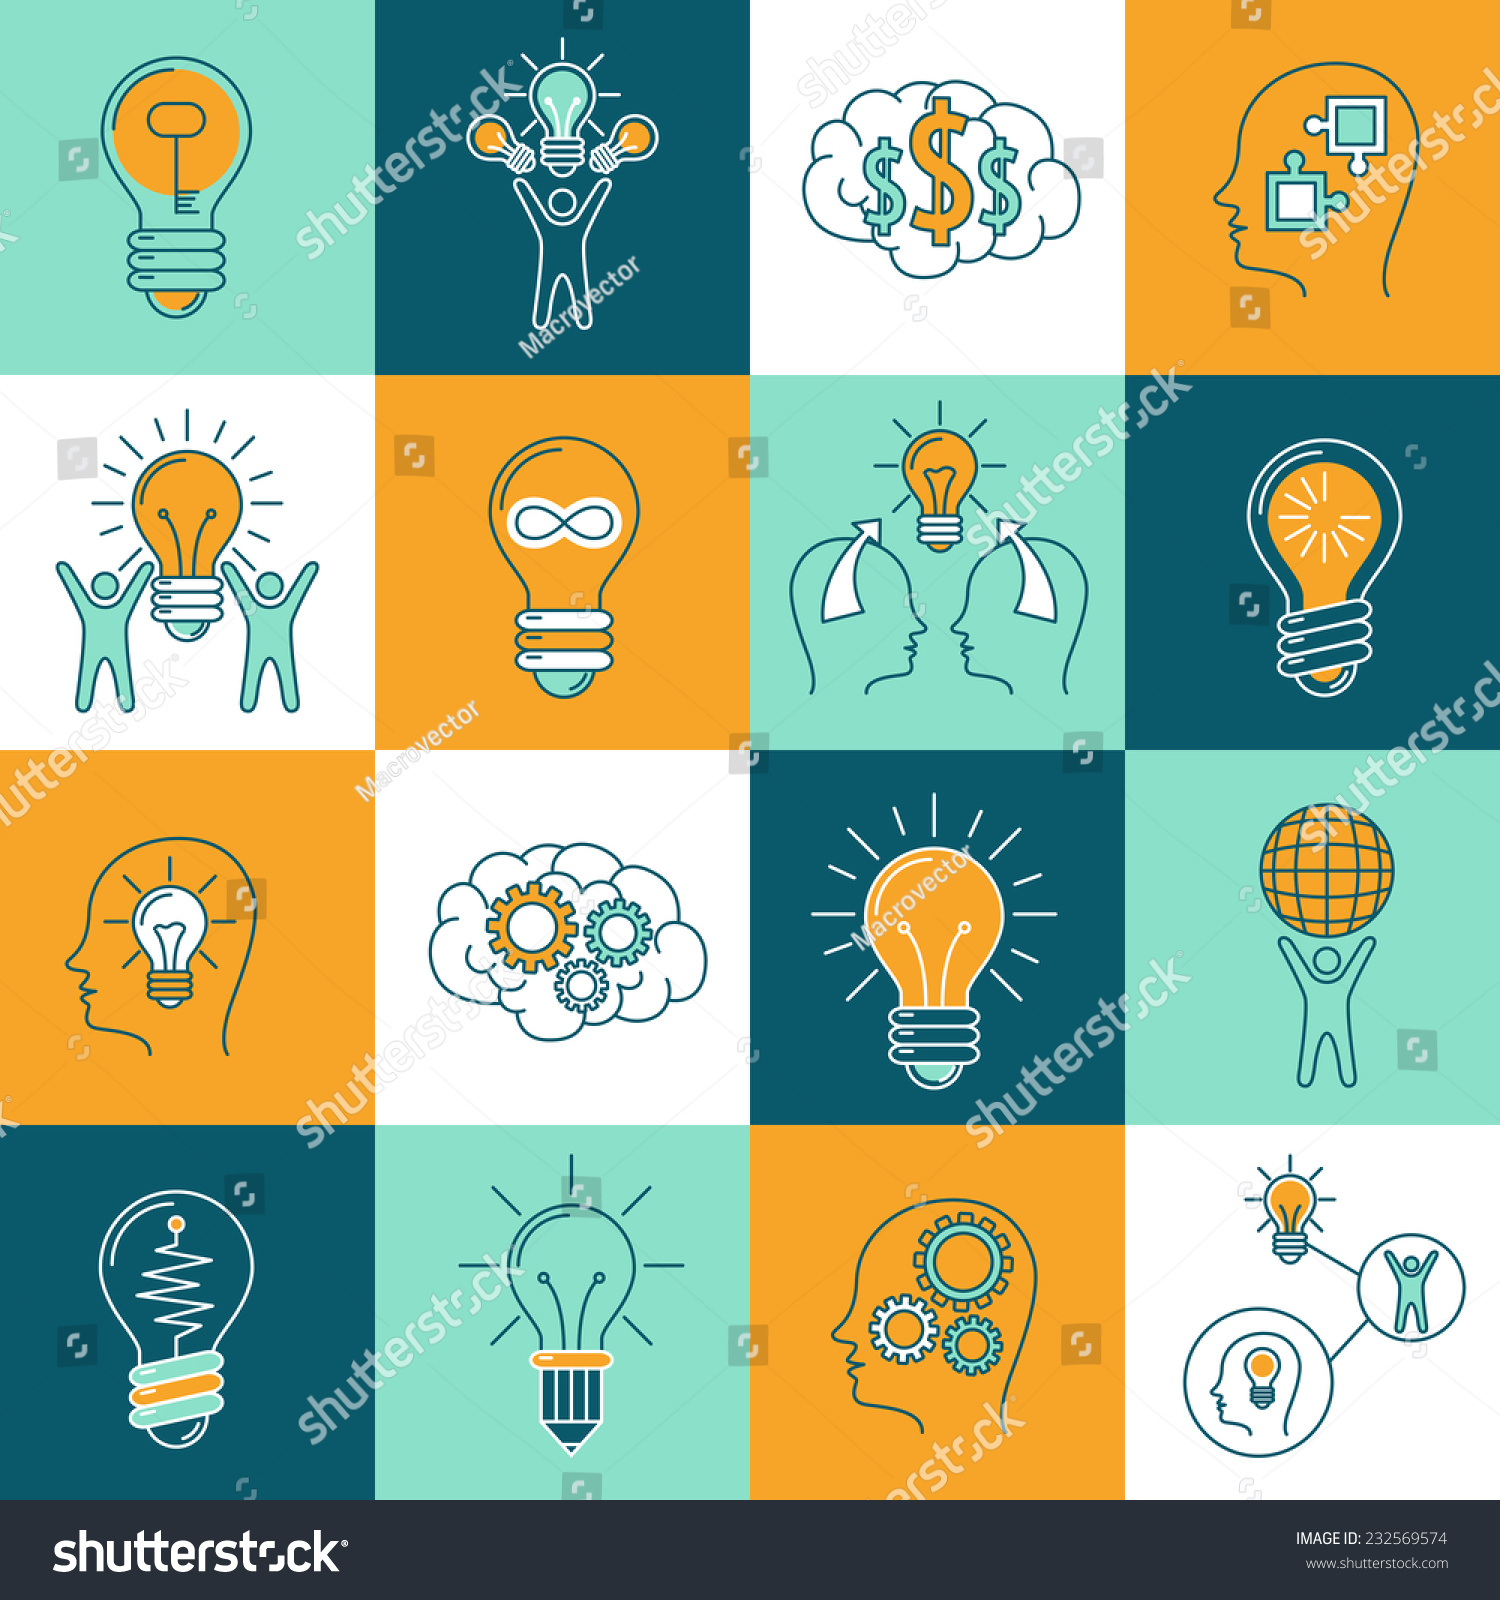 Idea creative innovation thinking icons set with light bulbs and human brain isolated vector illustration #232569574